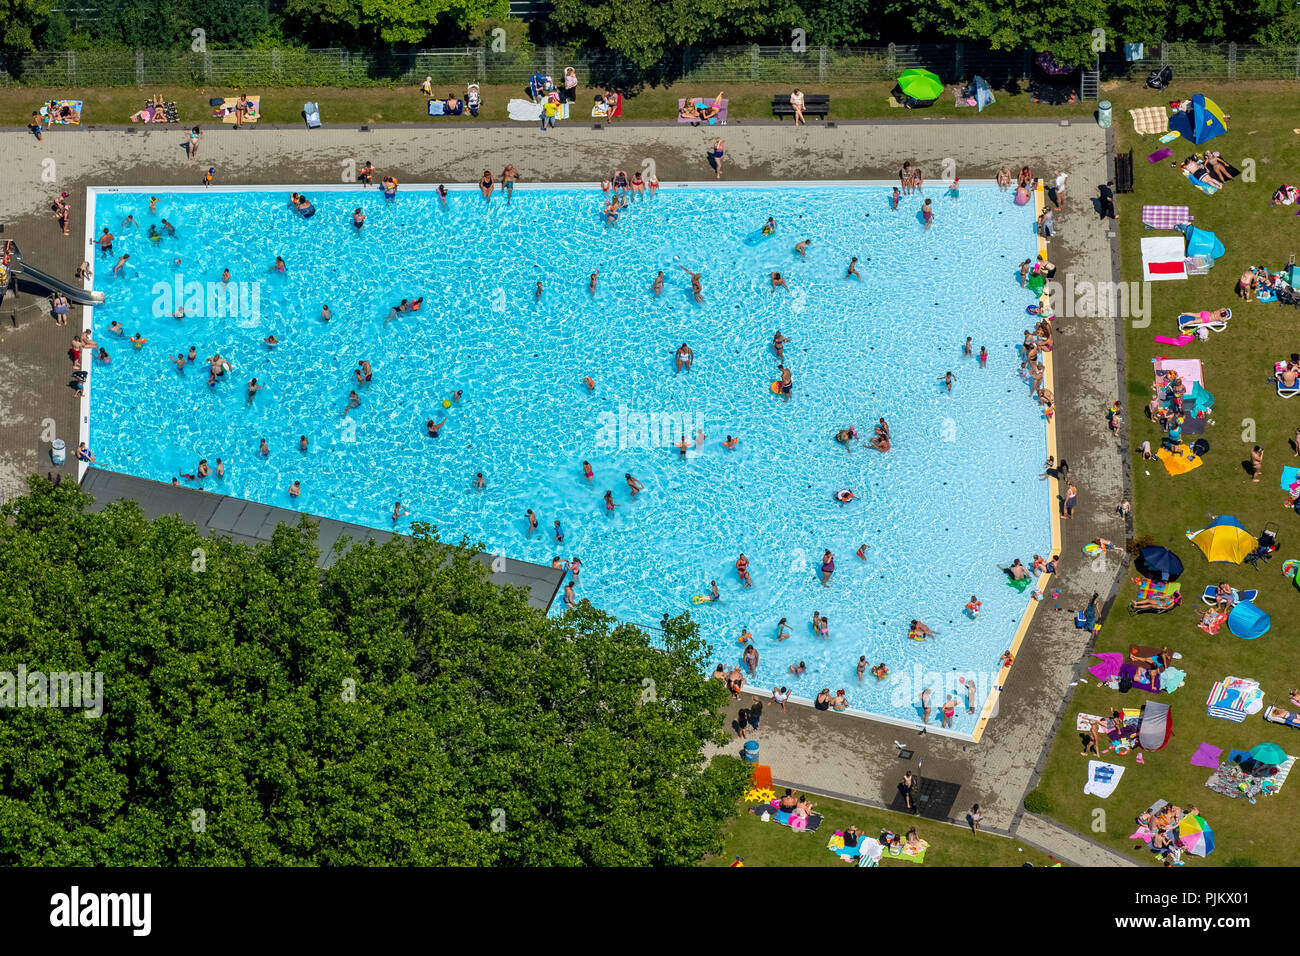 Outdoor pool Dellwig at Rhein-Herne-Kanal, outdoor pool, sunbathing area with sunbathers, summer, Essen, Ruhr area, North Rhine-Westphalia, Germany Stock Photo